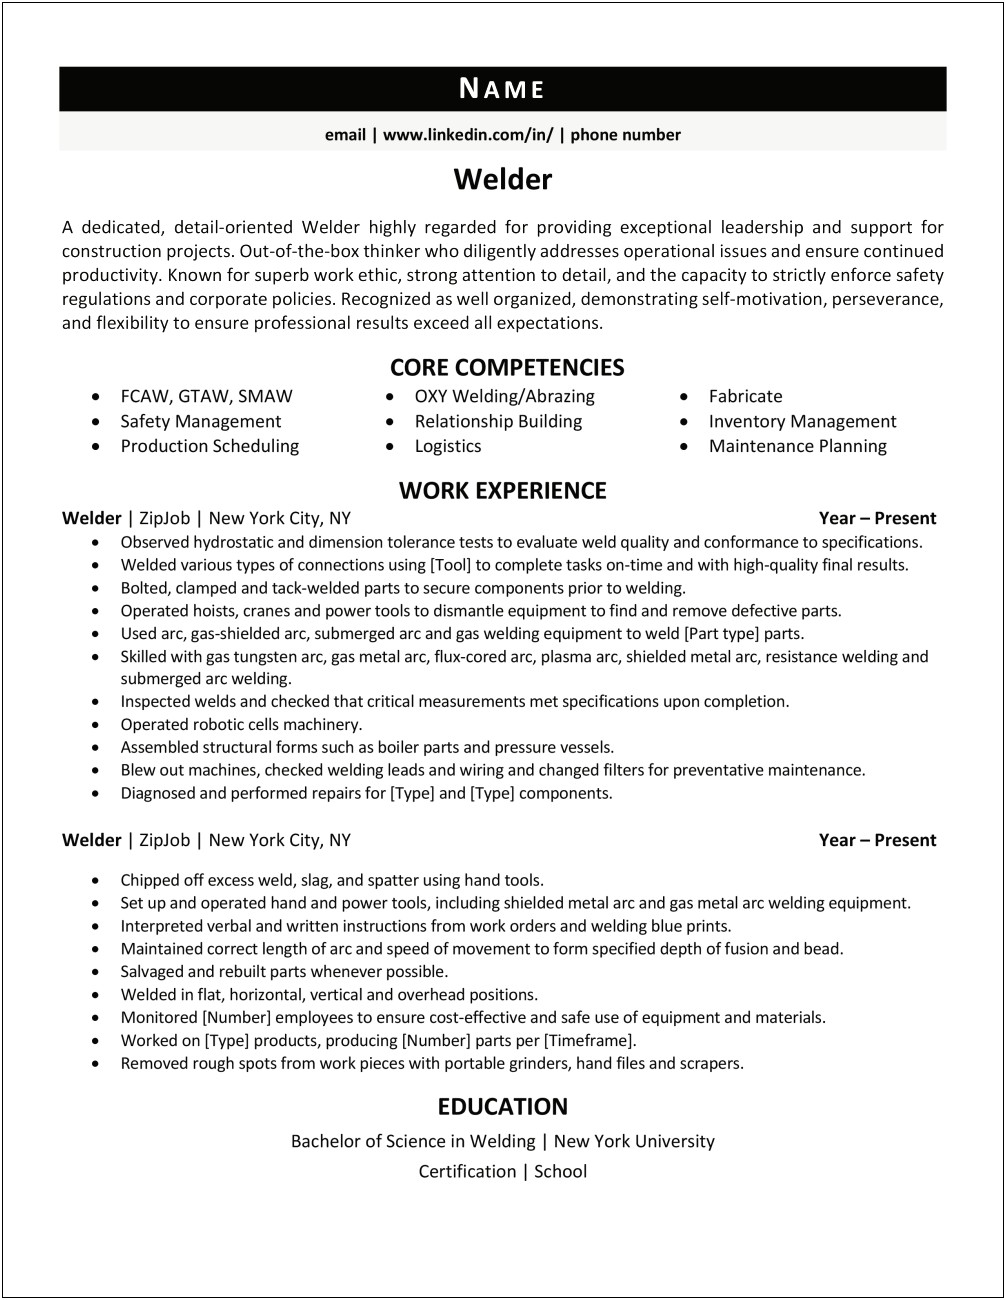 Sample Resume Of Smaw Welder With Job Description